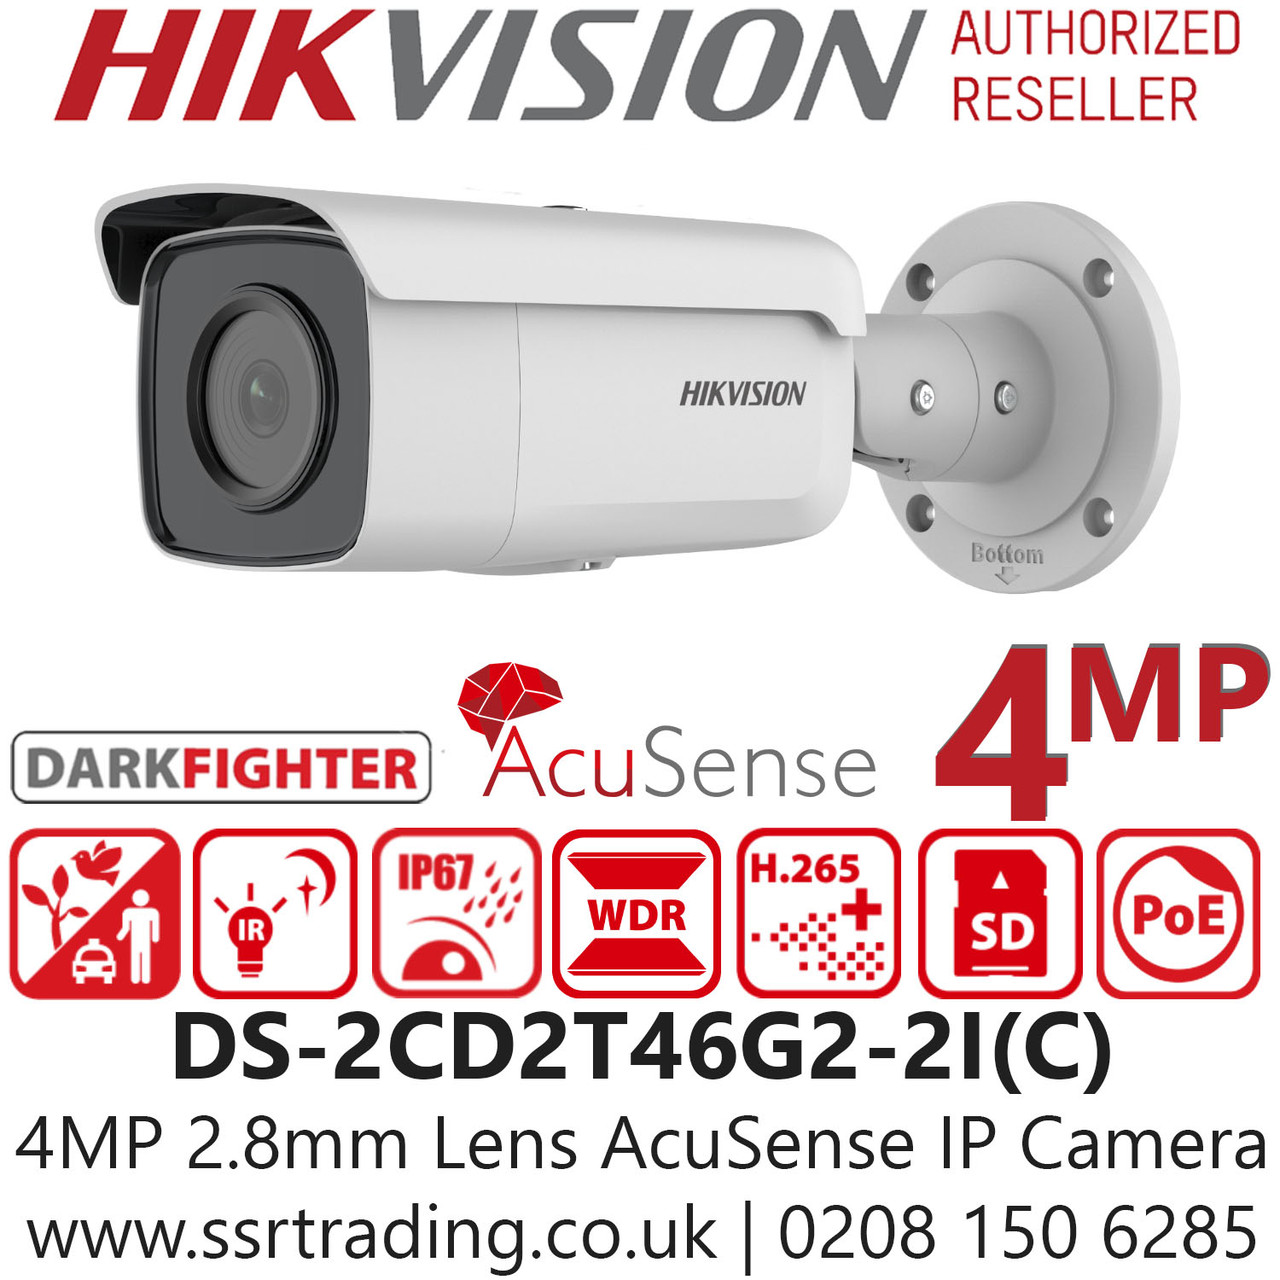 Hikvision Ds 2cd2t46g2 2i 2 8mm C 4mp Acusense Darkfighter Outdoor Poe Ip Bullet Camera 2